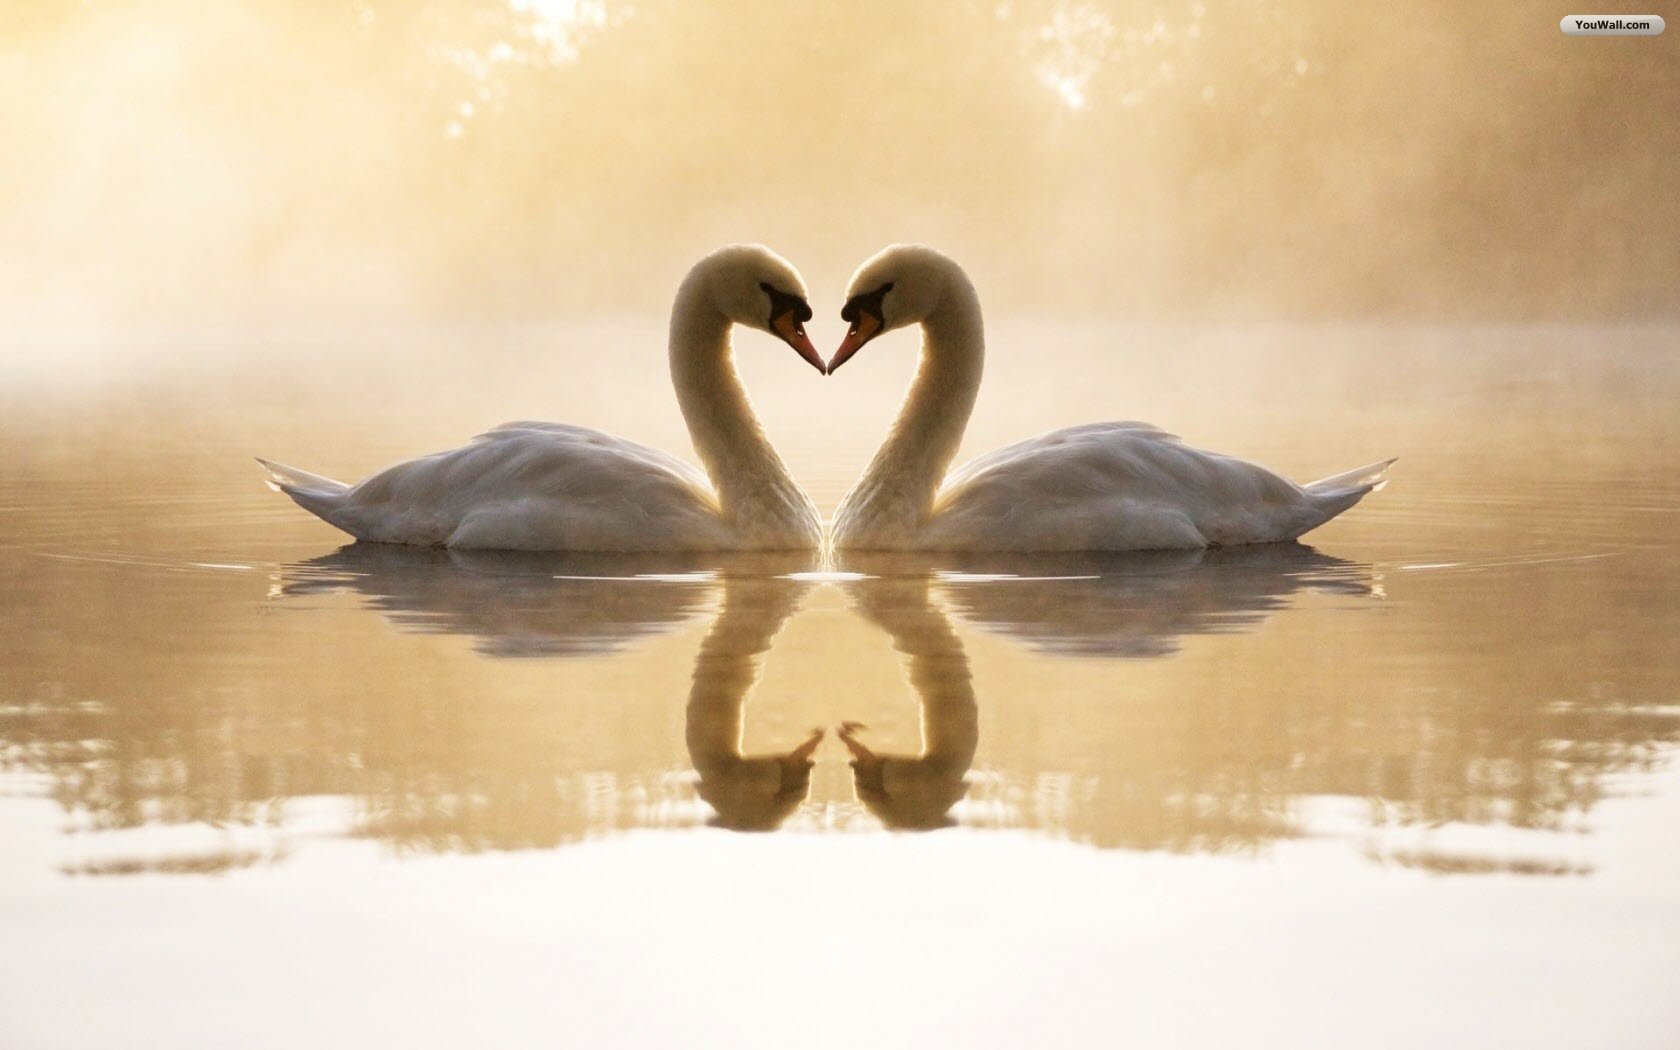   Swans in Love Wallpaper   wallpaperwallpapersfree wallpaper 1680x1050